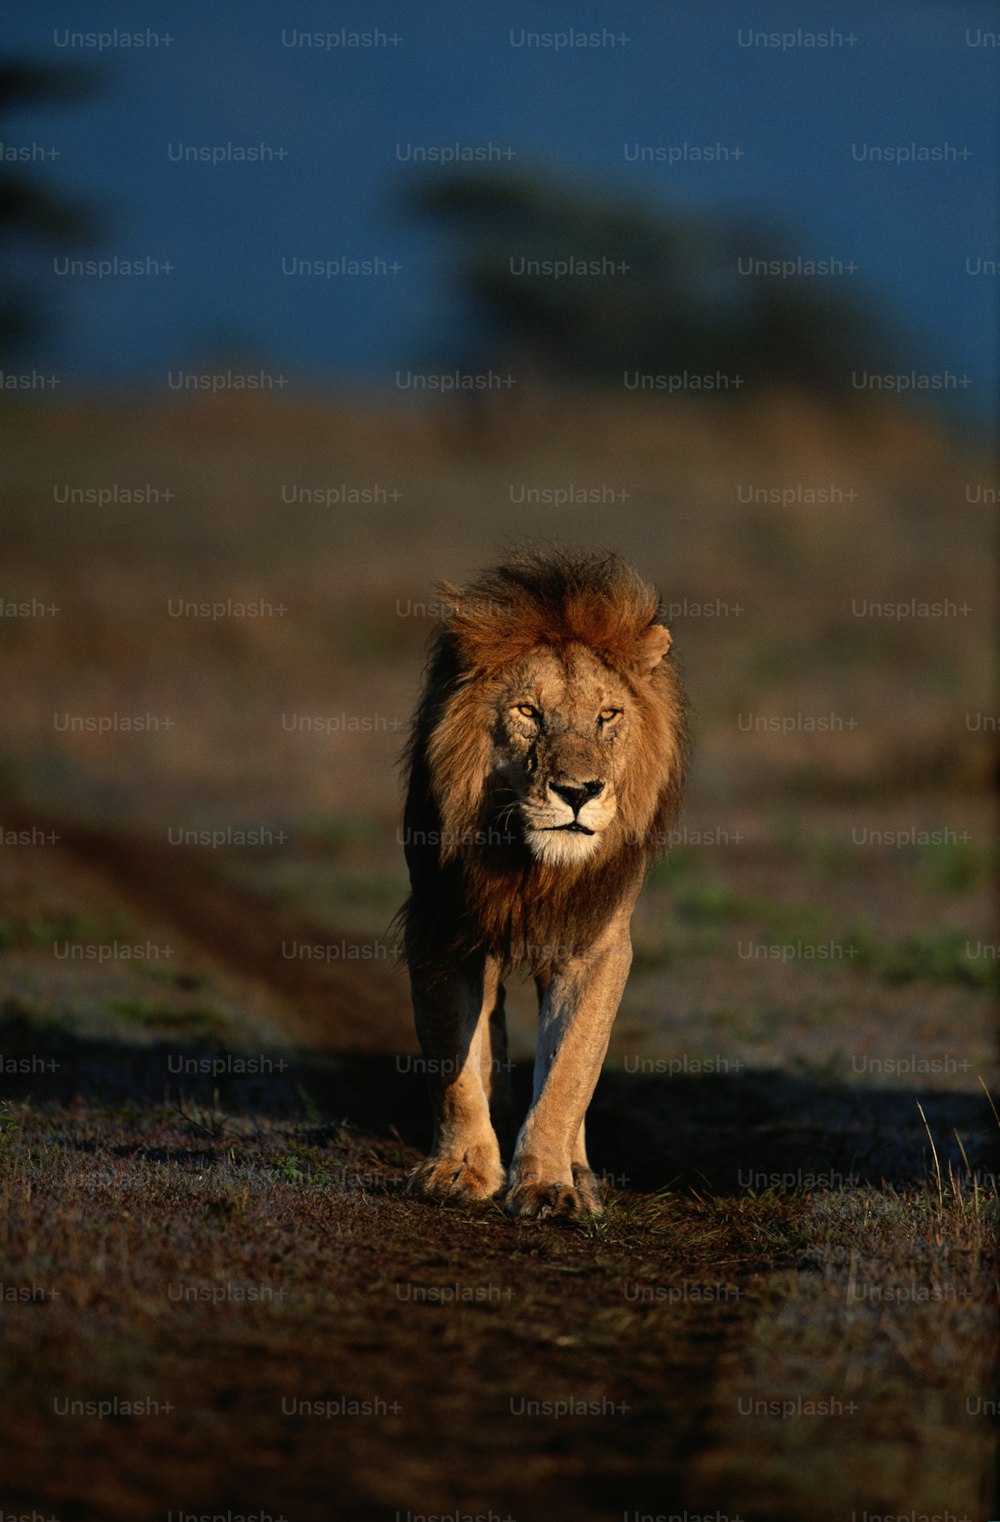 a lion walking across a grass covered field